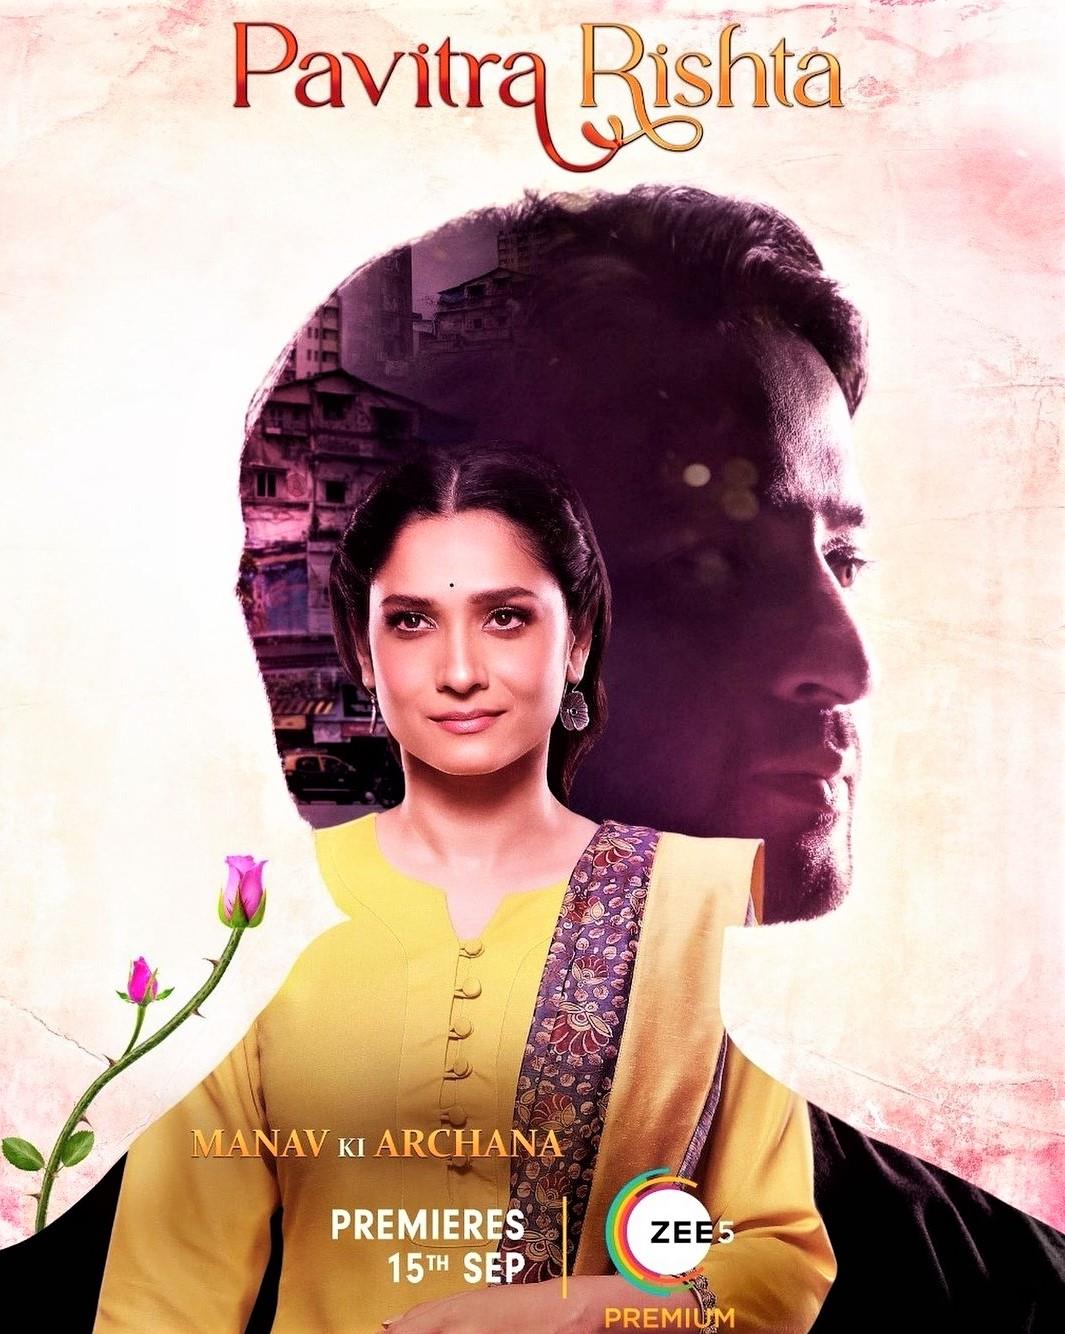 Pavitra Rishta 2 poster has been unveiled